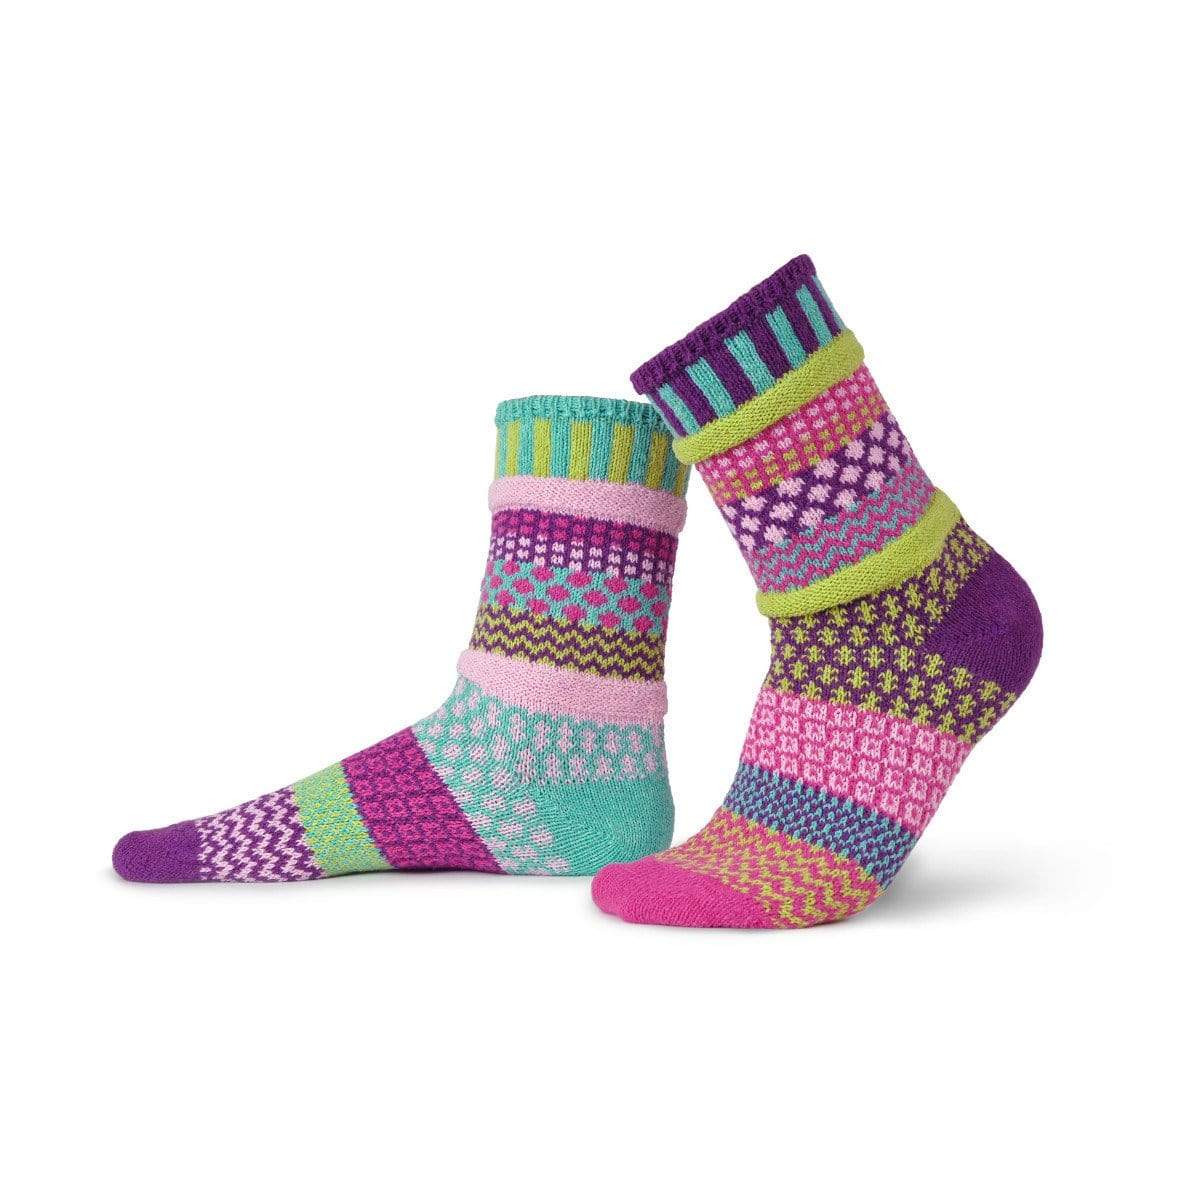 Solmate Socks - Dahlia Solmate Socks Clothing